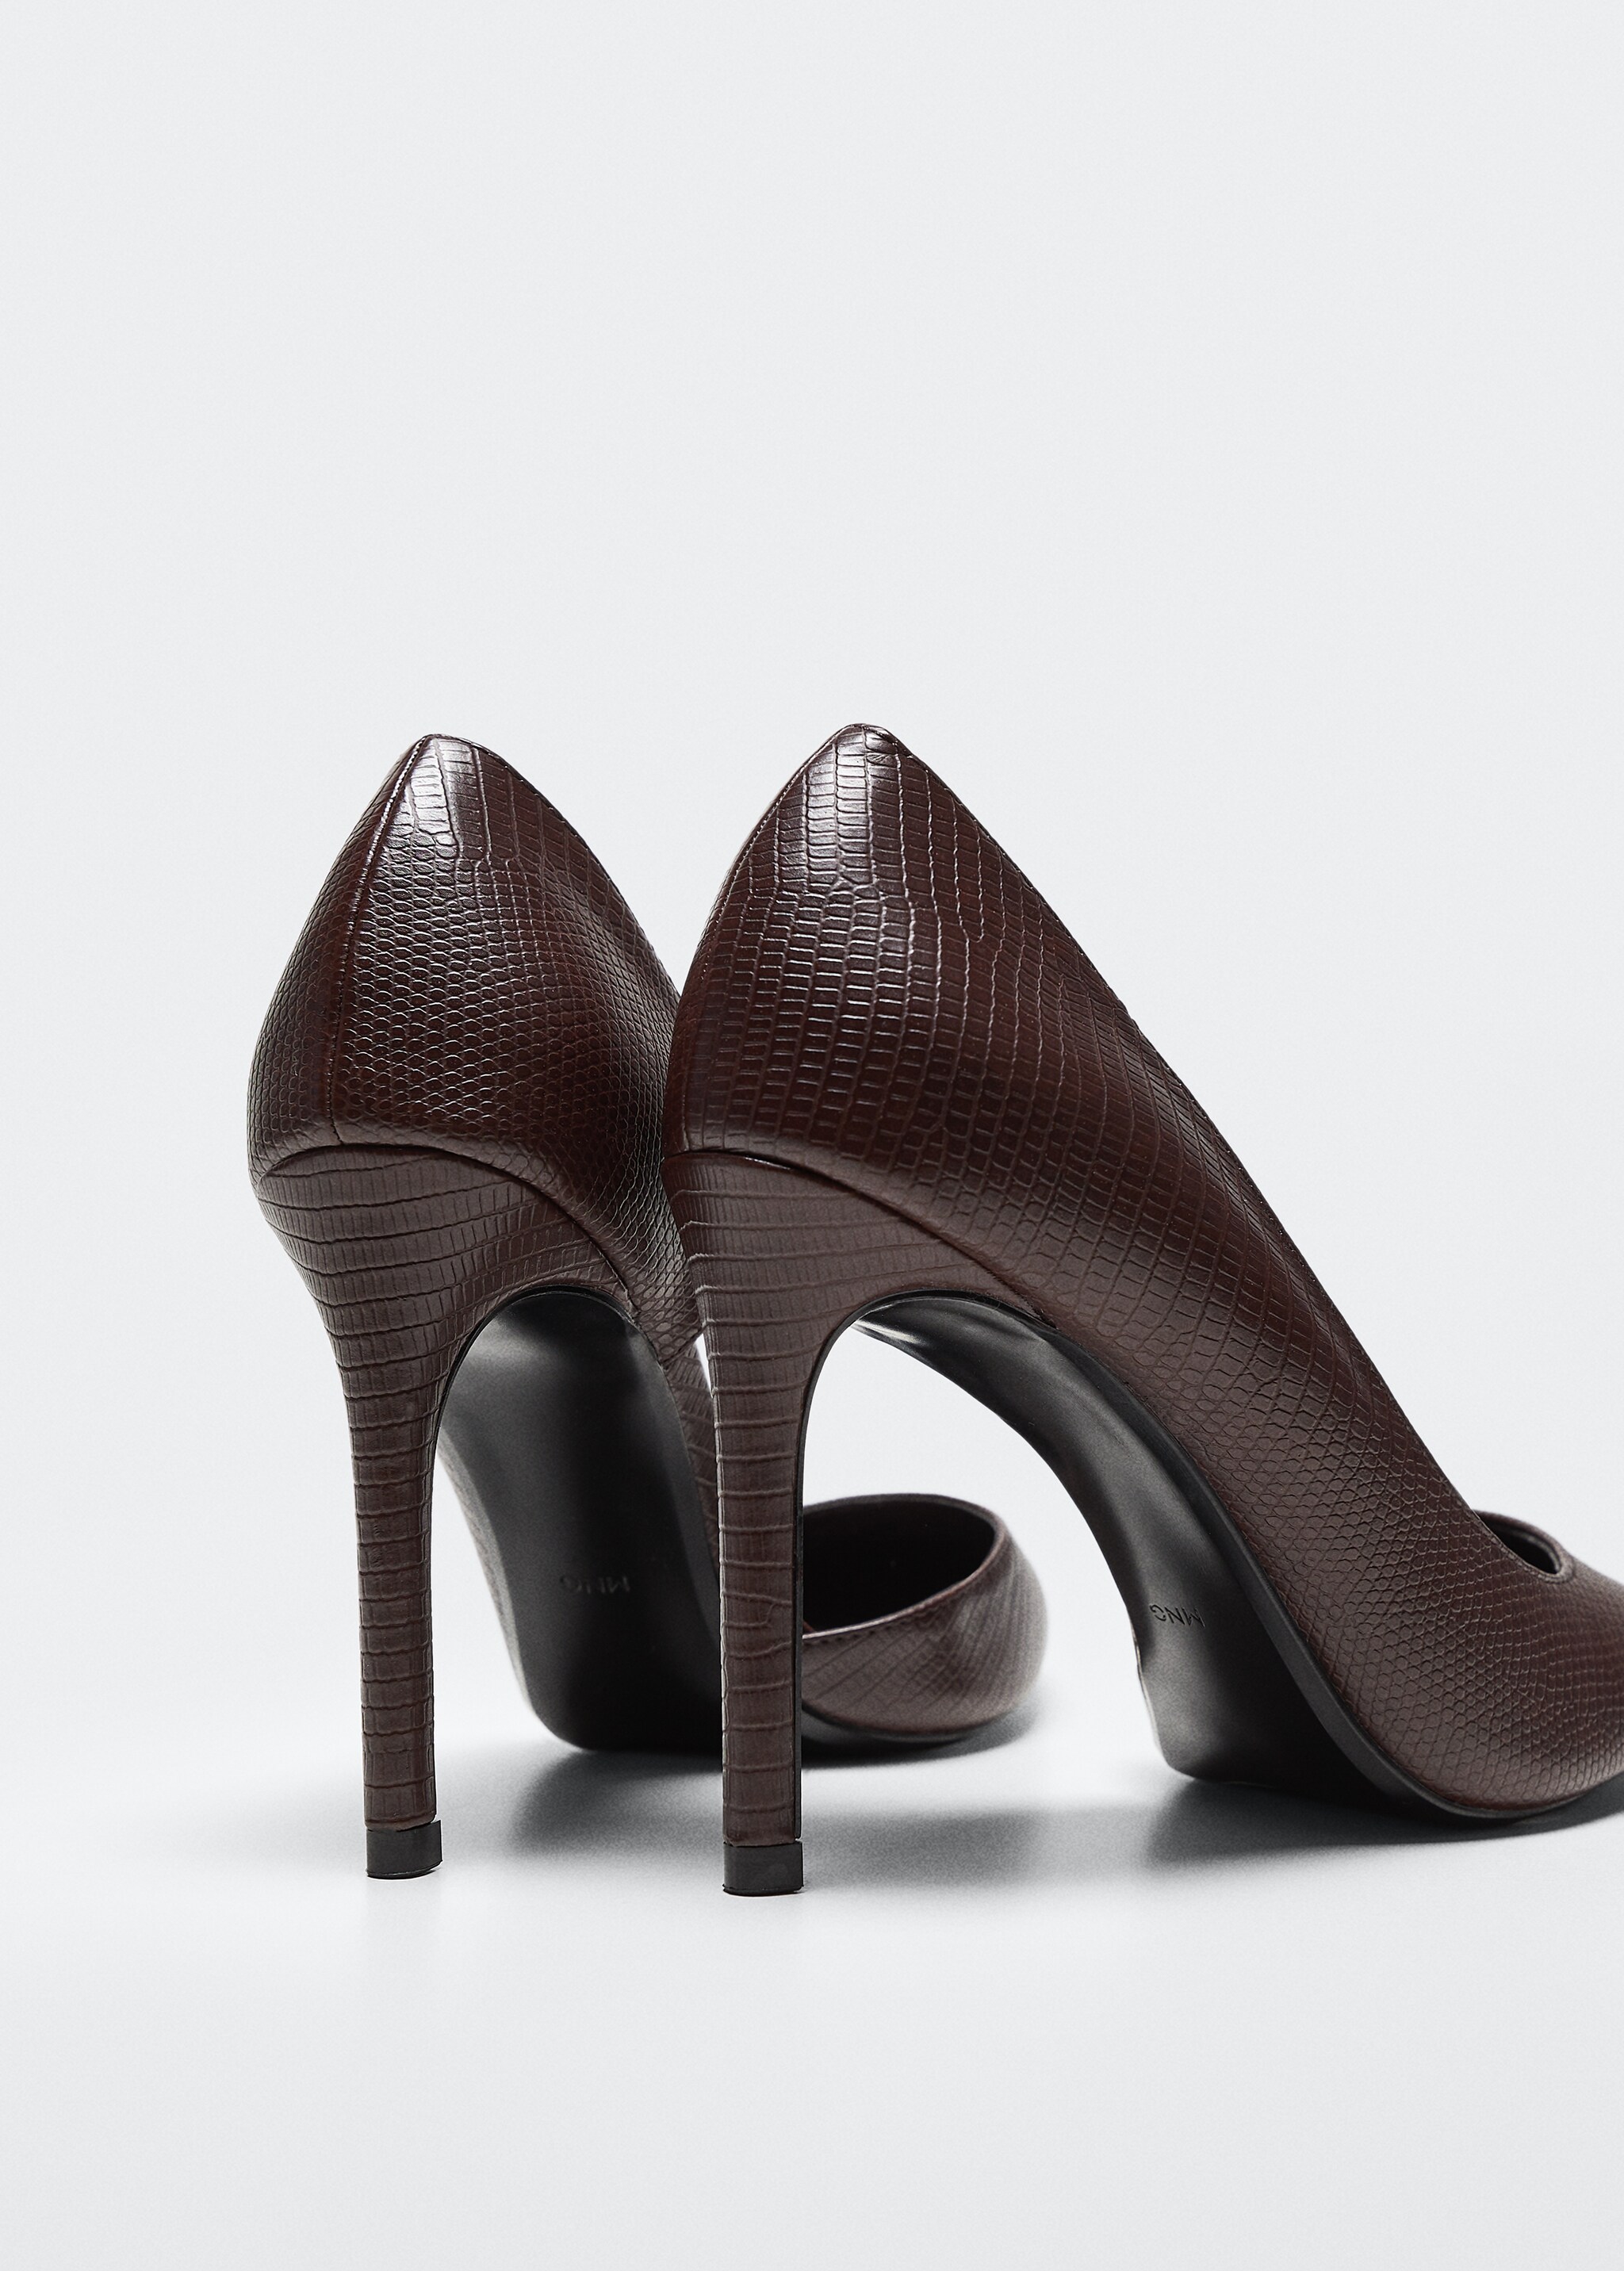 Asymmetric stiletto shoes - Details of the article 2